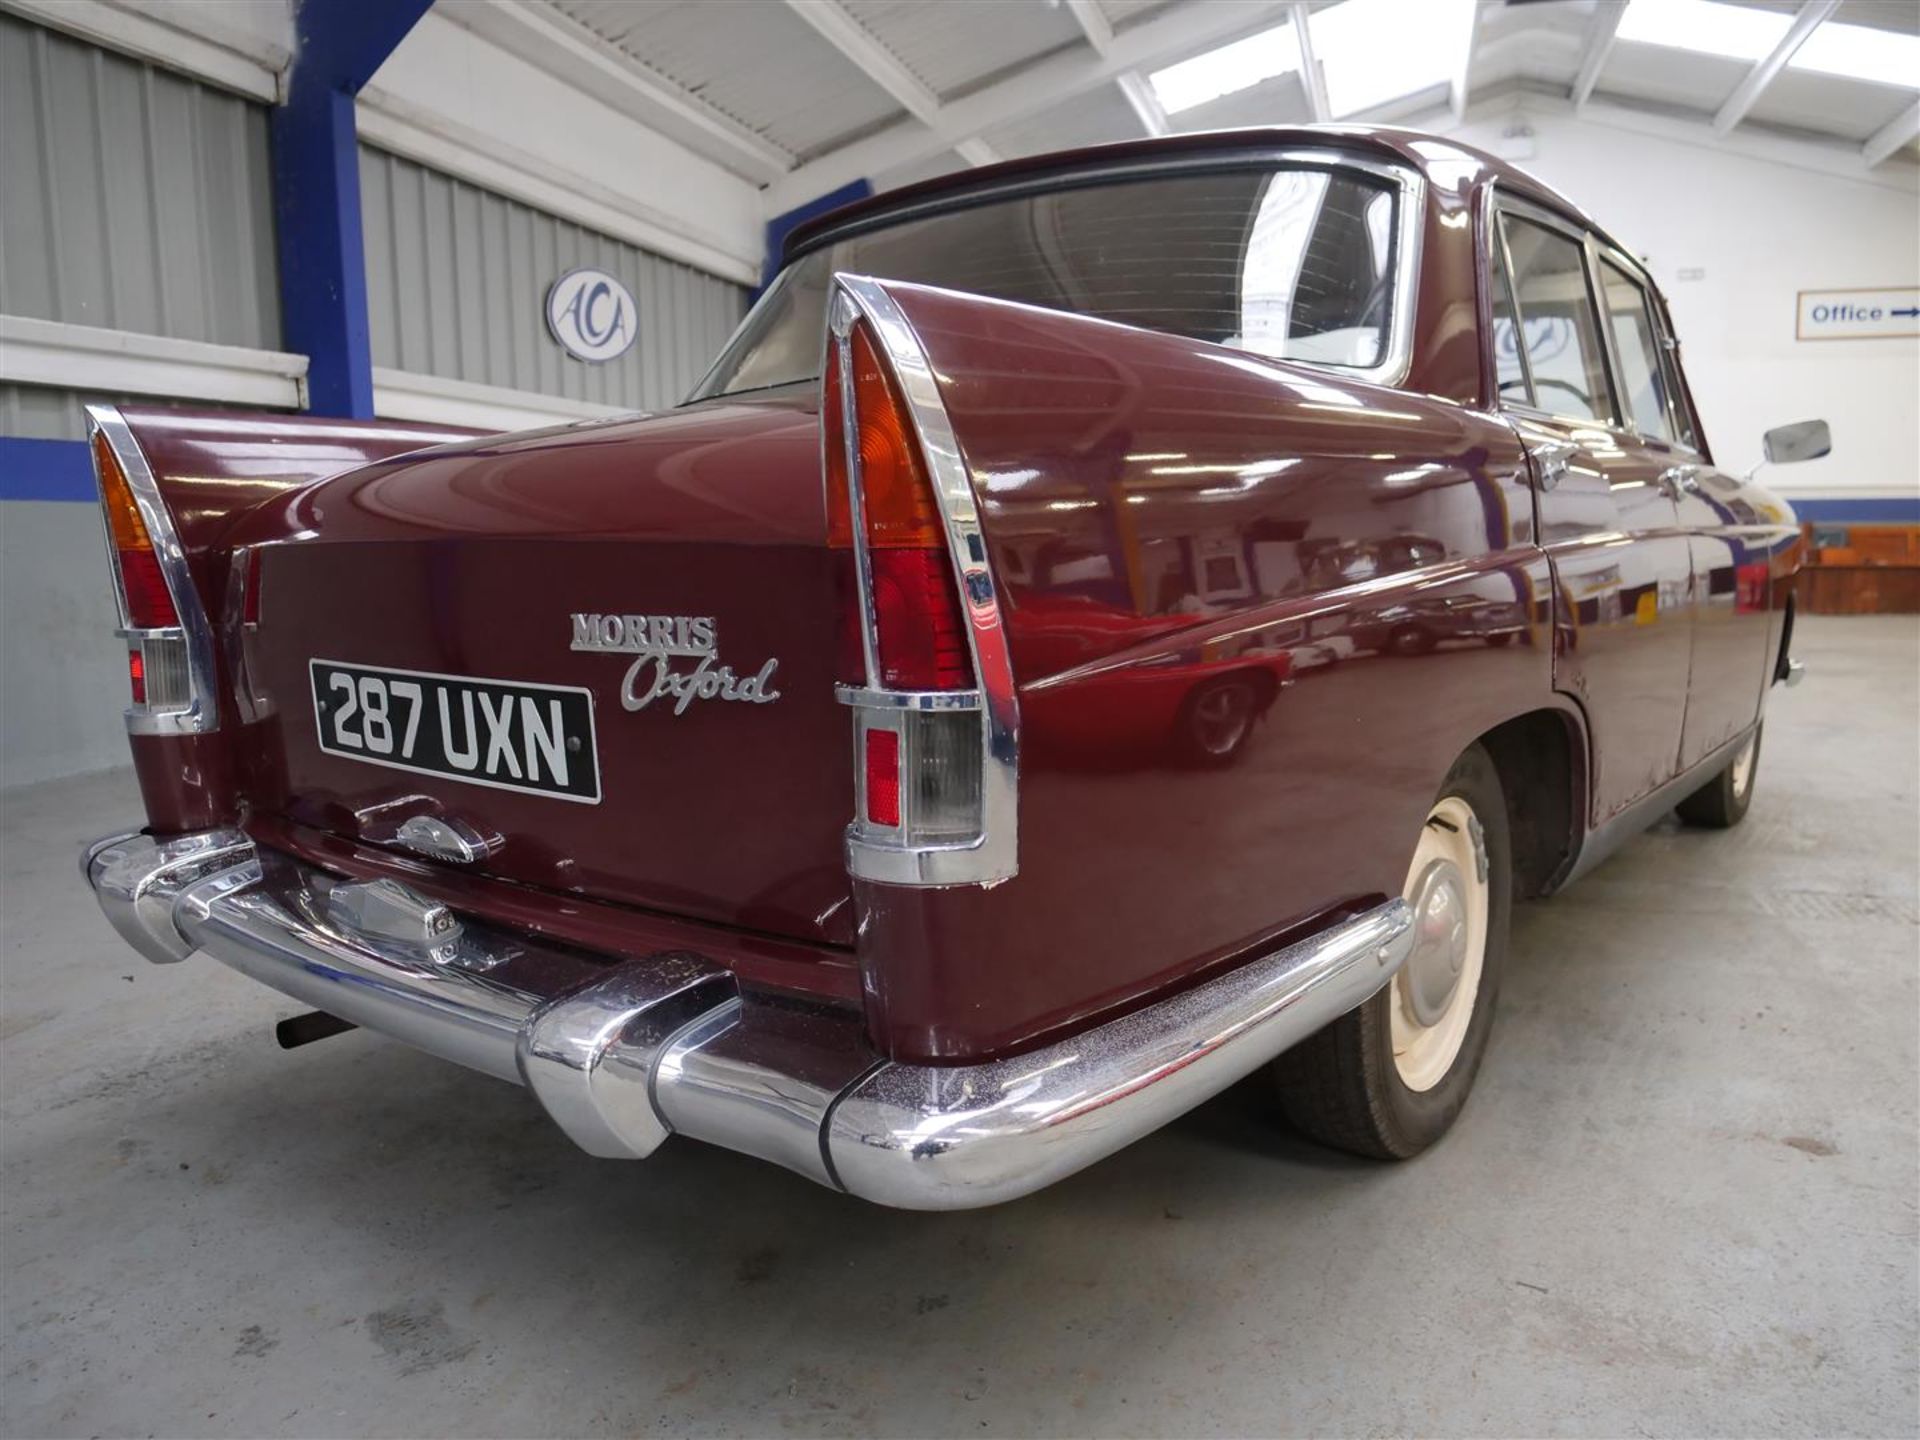 1961 Morris Oxford Series V - Image 34 of 44